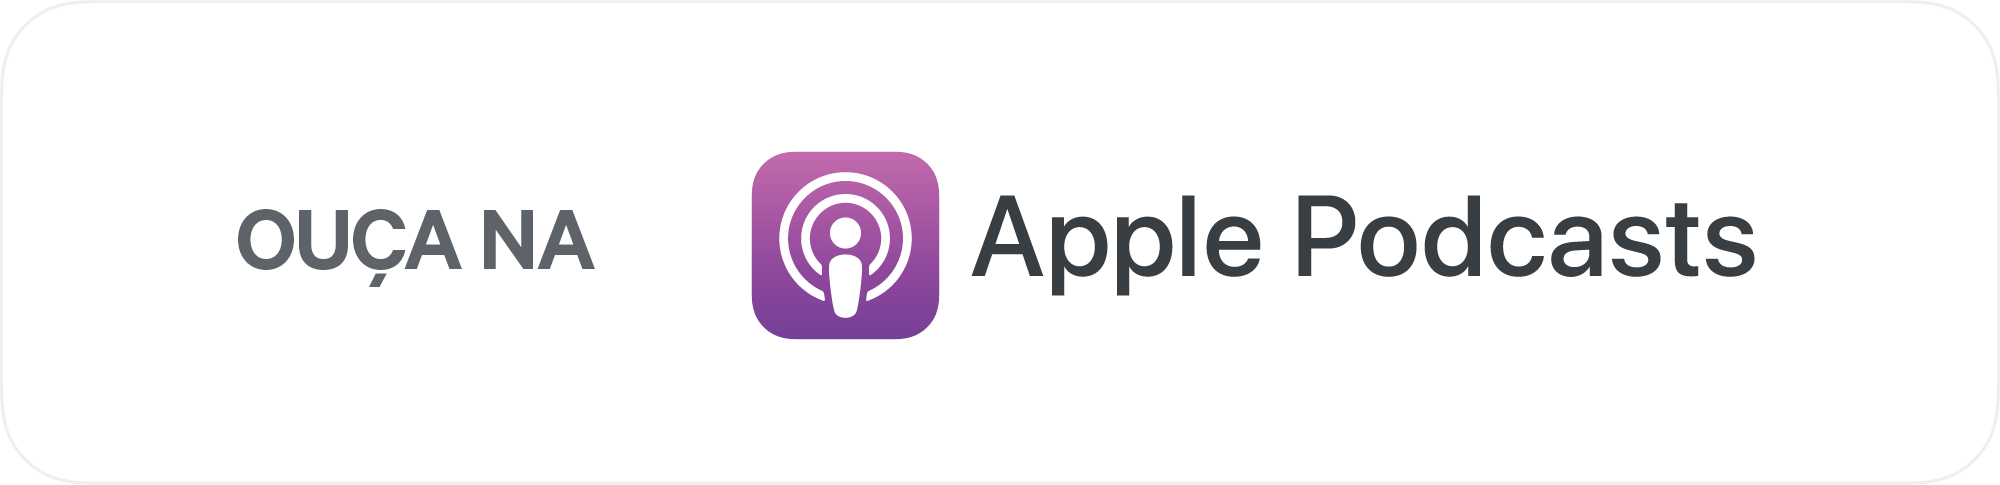 podcast engenharia 360 apple podcast